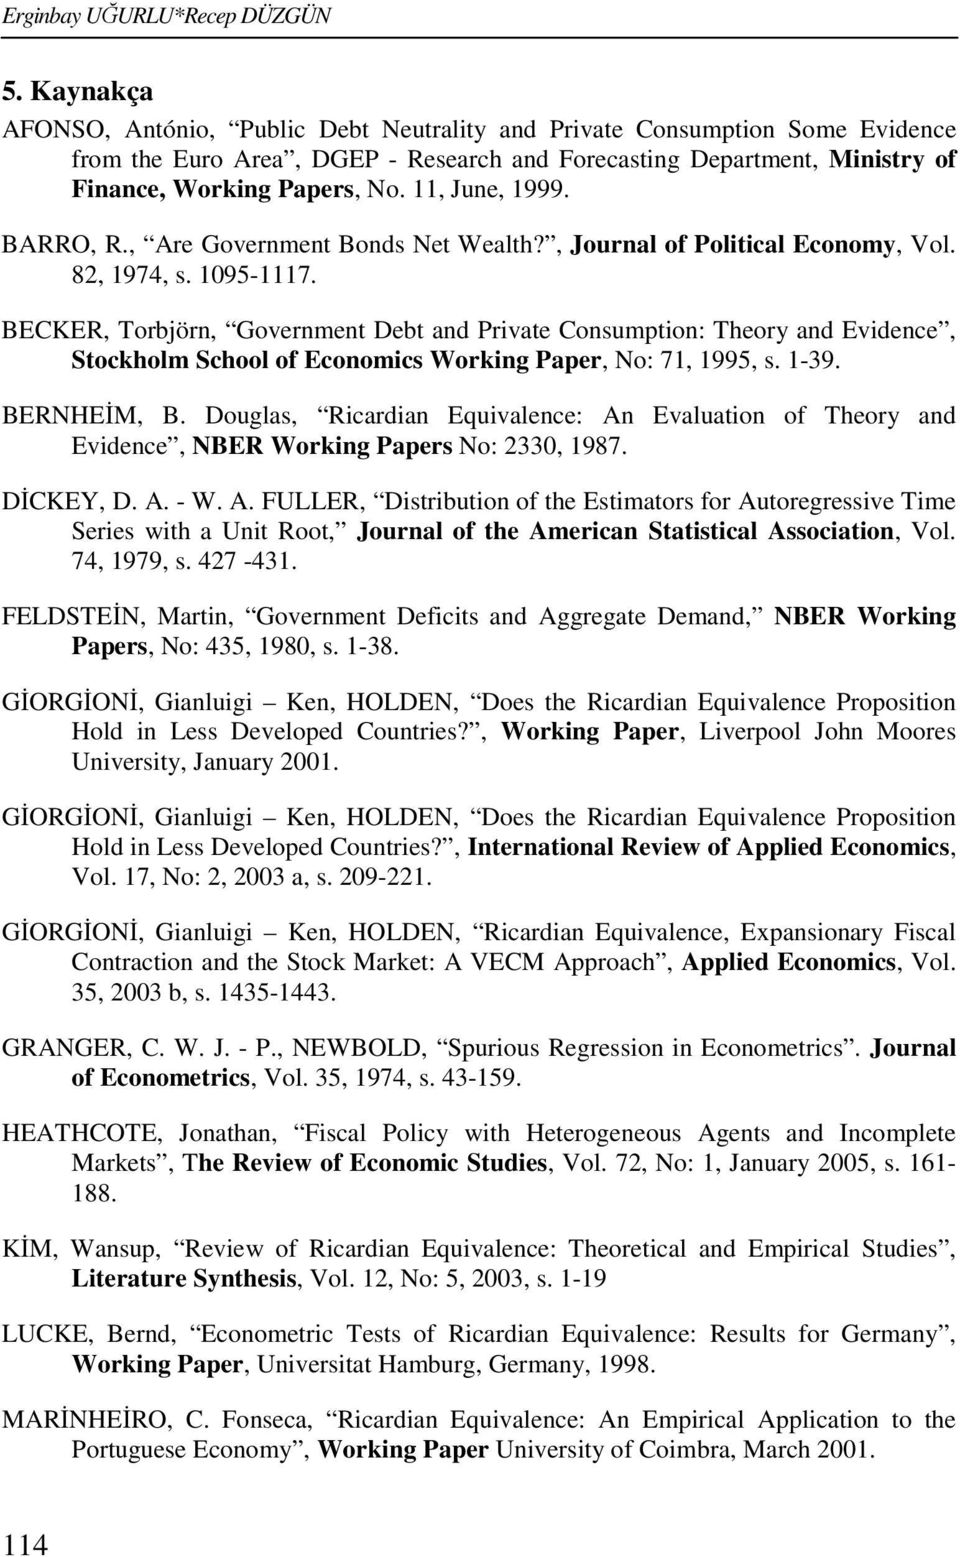 BARRO, R., Are Governmen Bonds Ne Wealh?, Journal of Poliical Economy, Vol. 8, 97, s. 095-7.